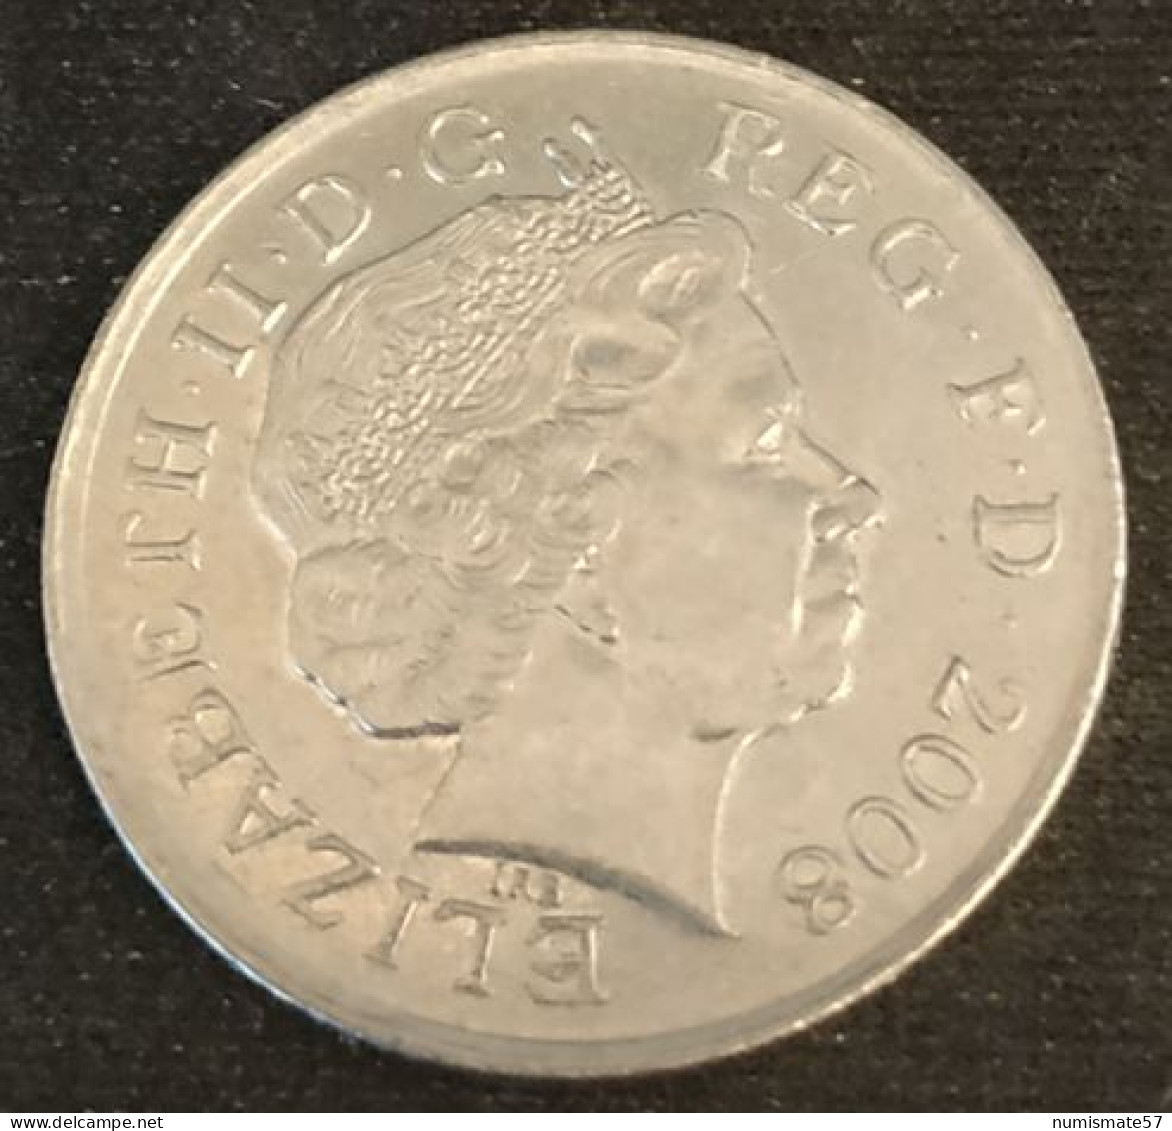 GRANDE BRETAGNE - 10 PENCE 2008 - Elizabeth II - 4e Effigie - Type Blason - KM 1110 - 10 Pence & 10 New Pence